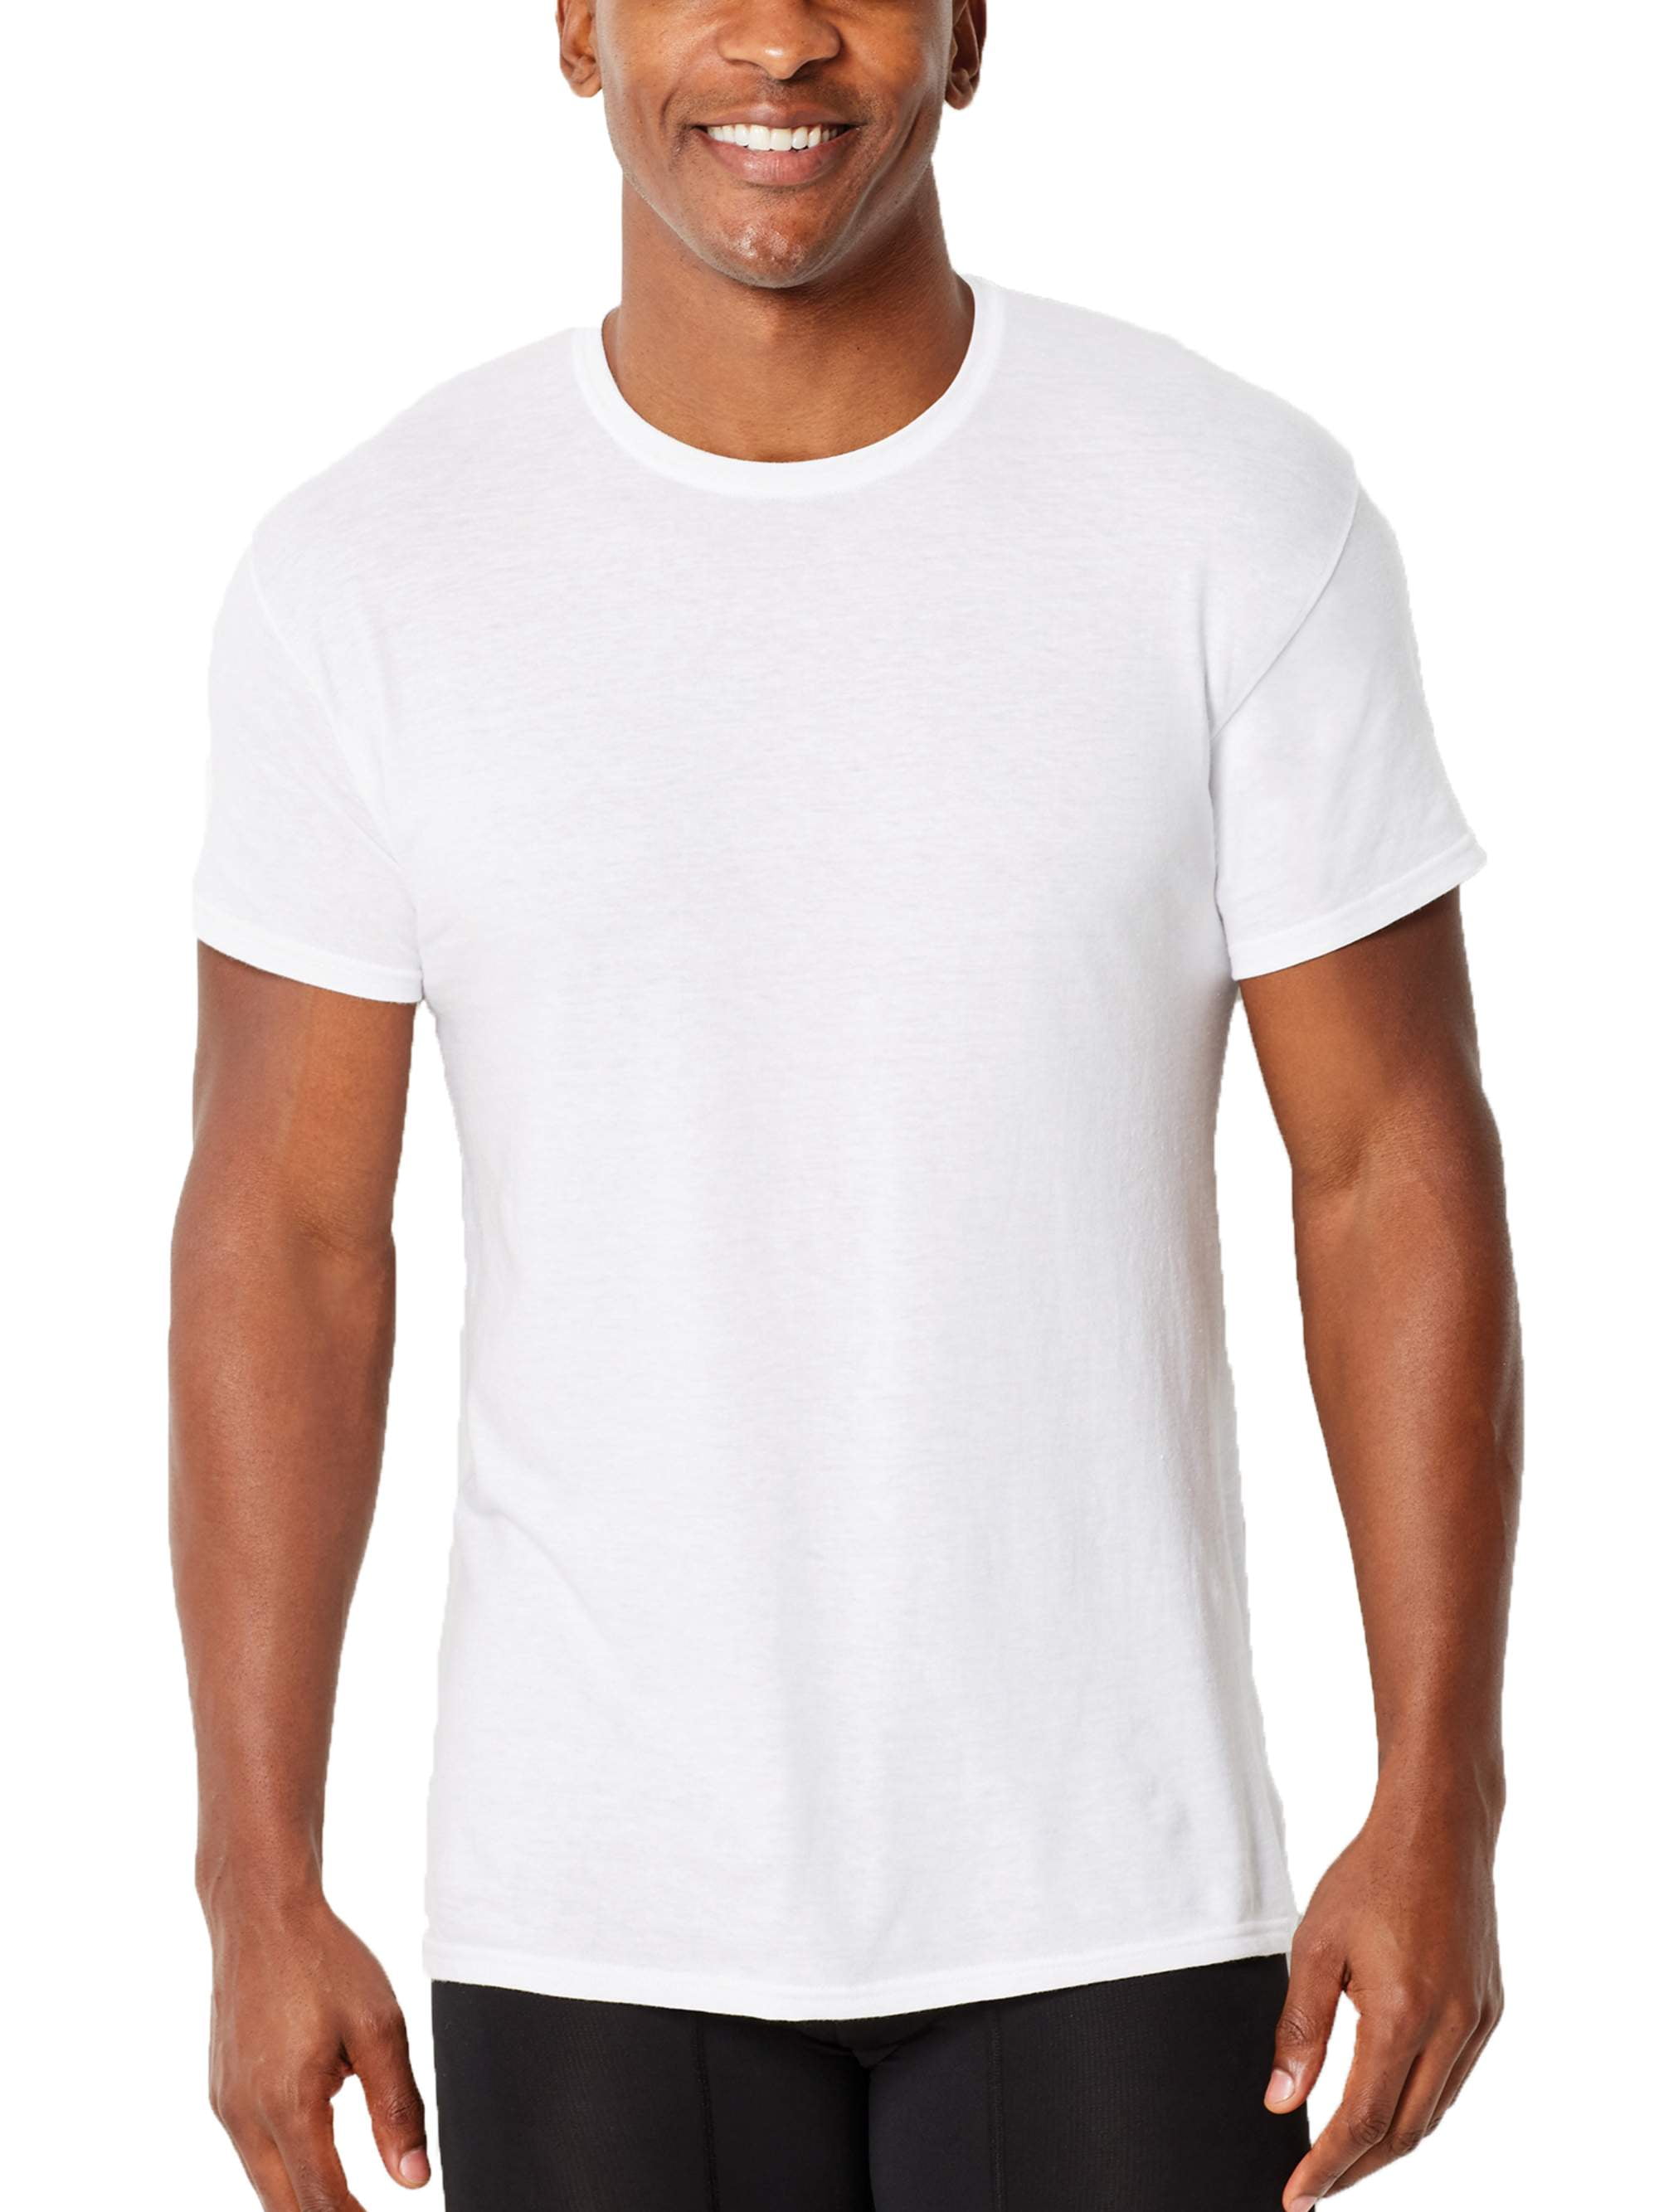 Hanes - Hanes Mens ComfortFlex Fit White Crew T-Shirt, 4 Pack - Walmart.com